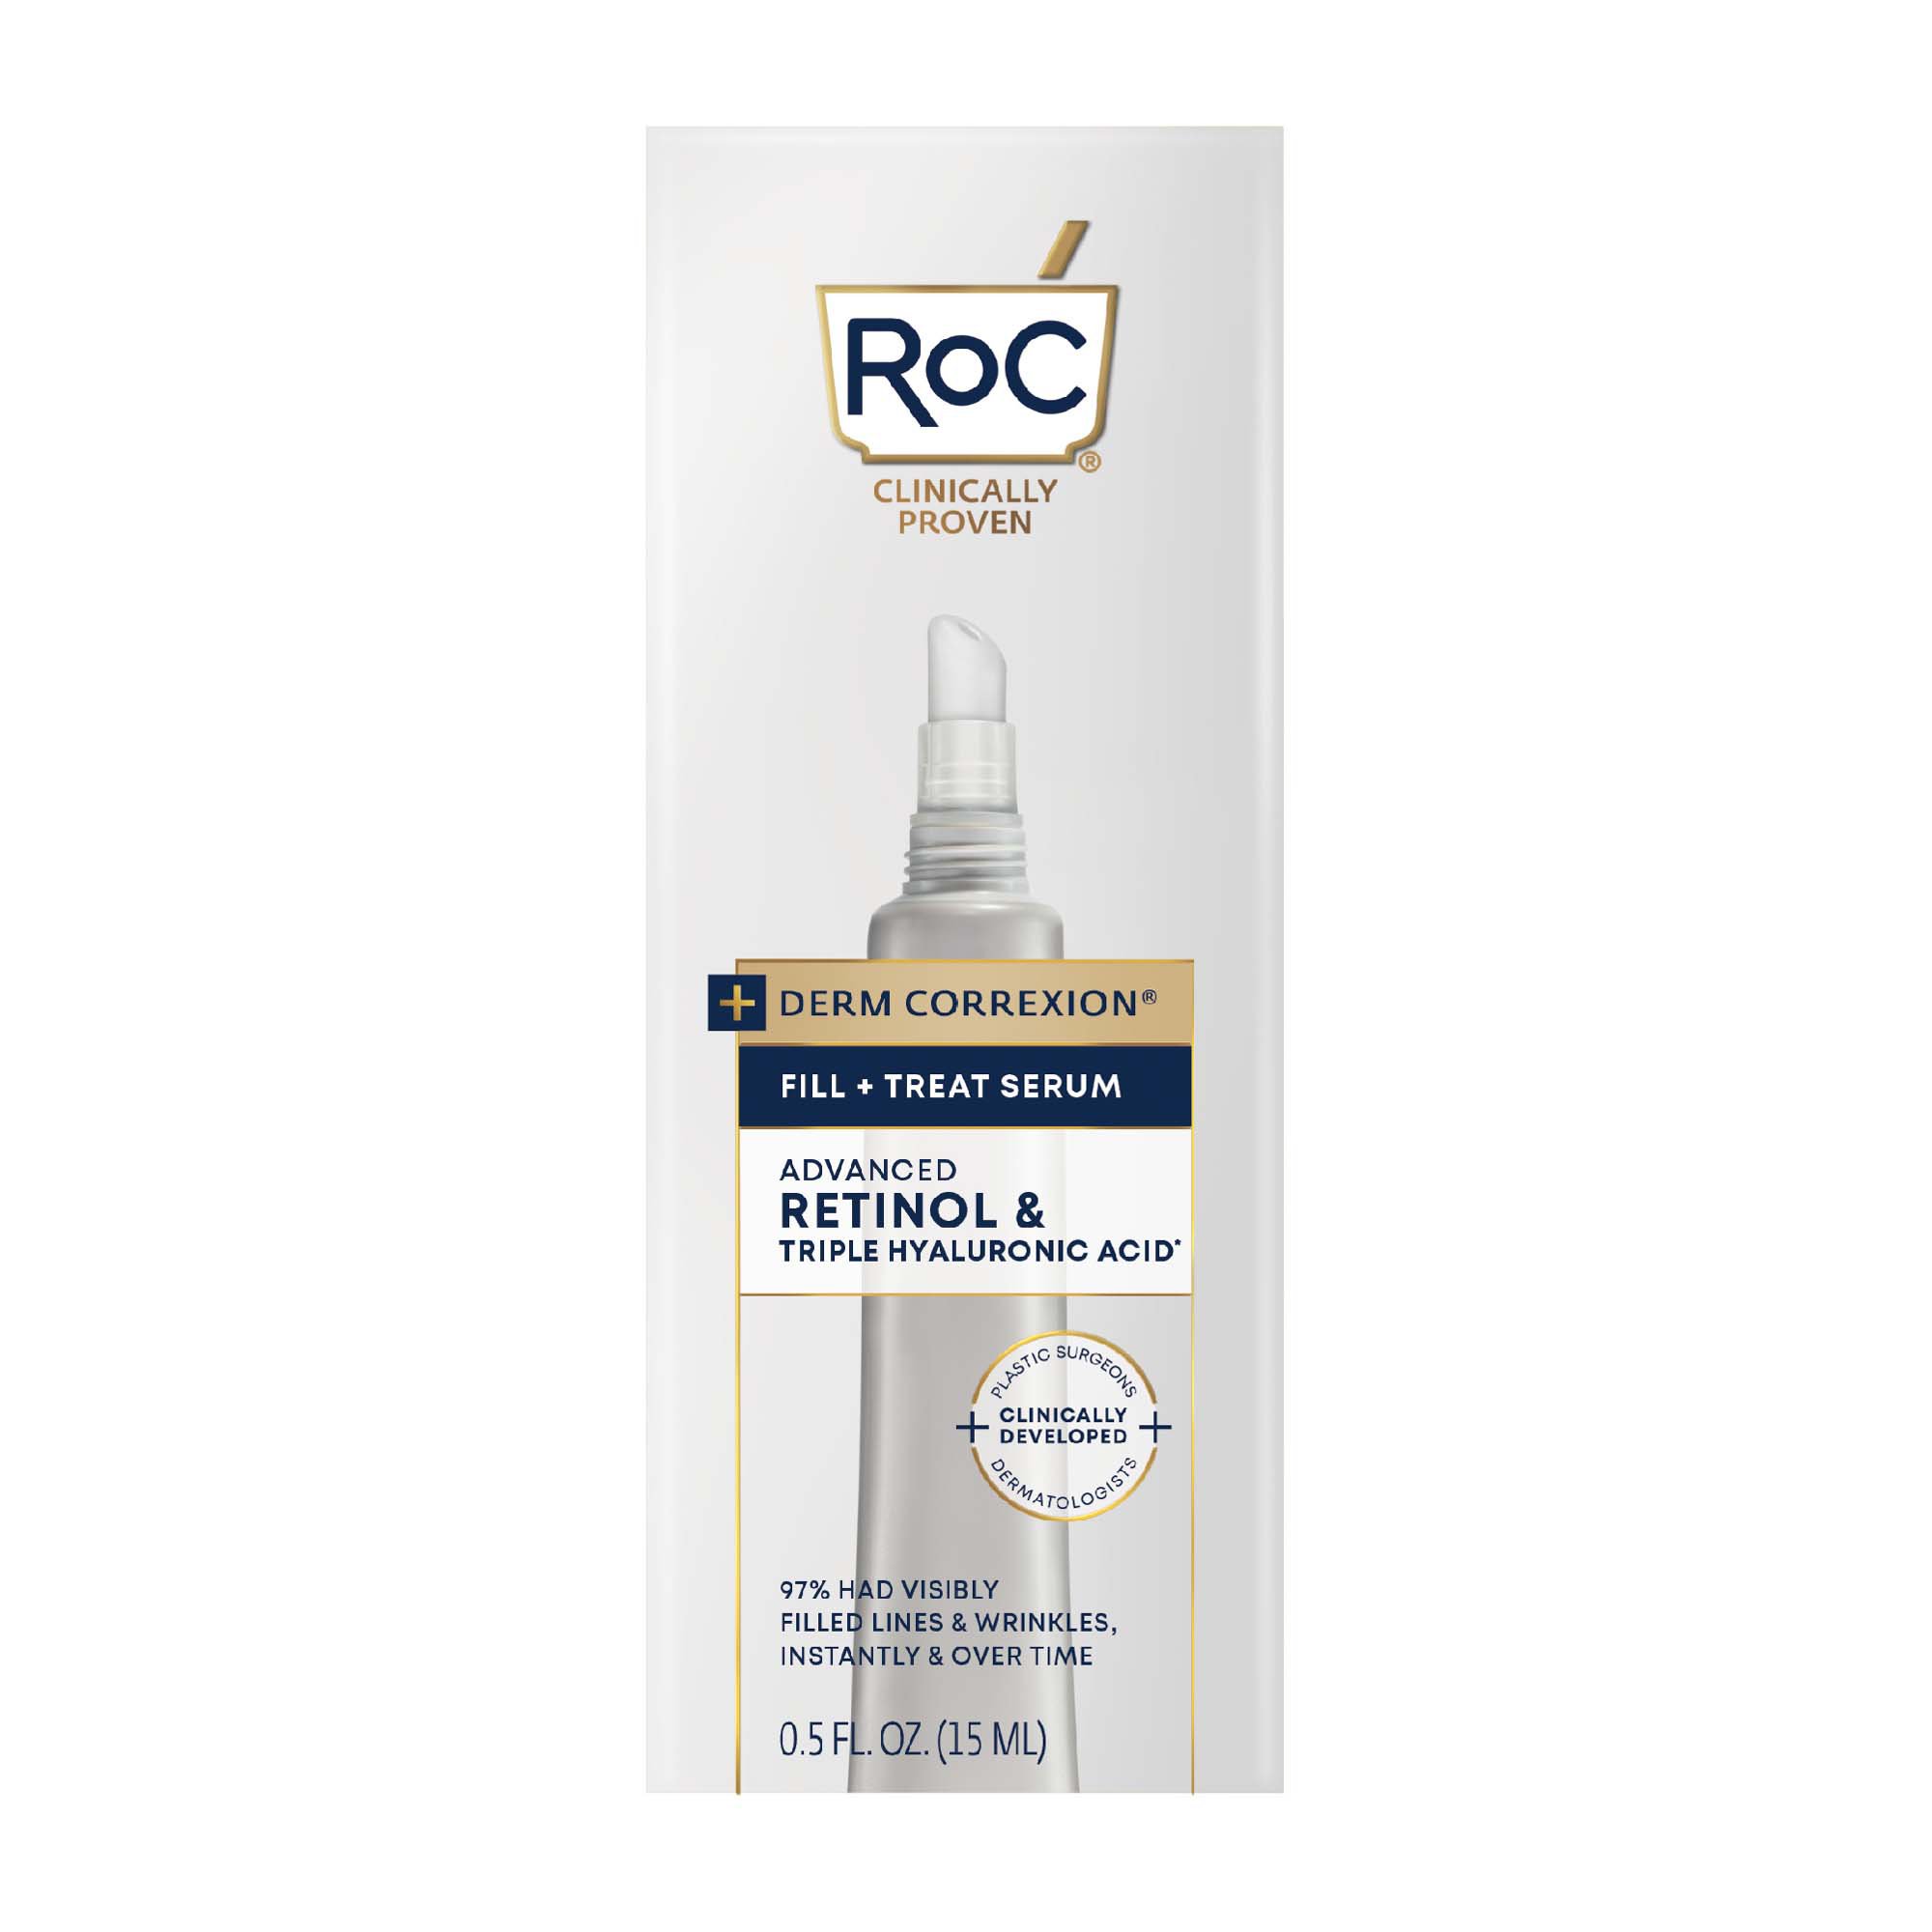 roc advanced retinol and triple hyaluronic acid